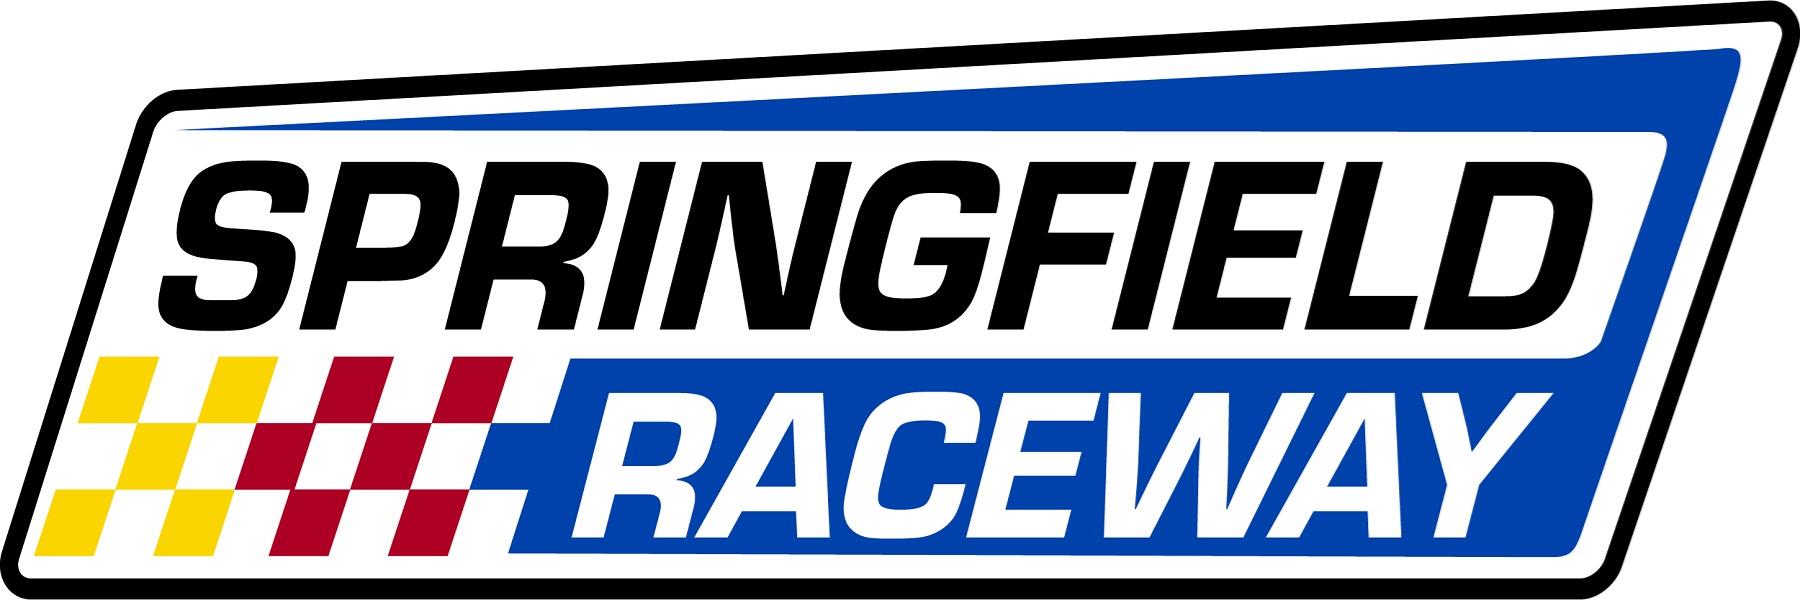 8/6/2022 - Springfield Raceway